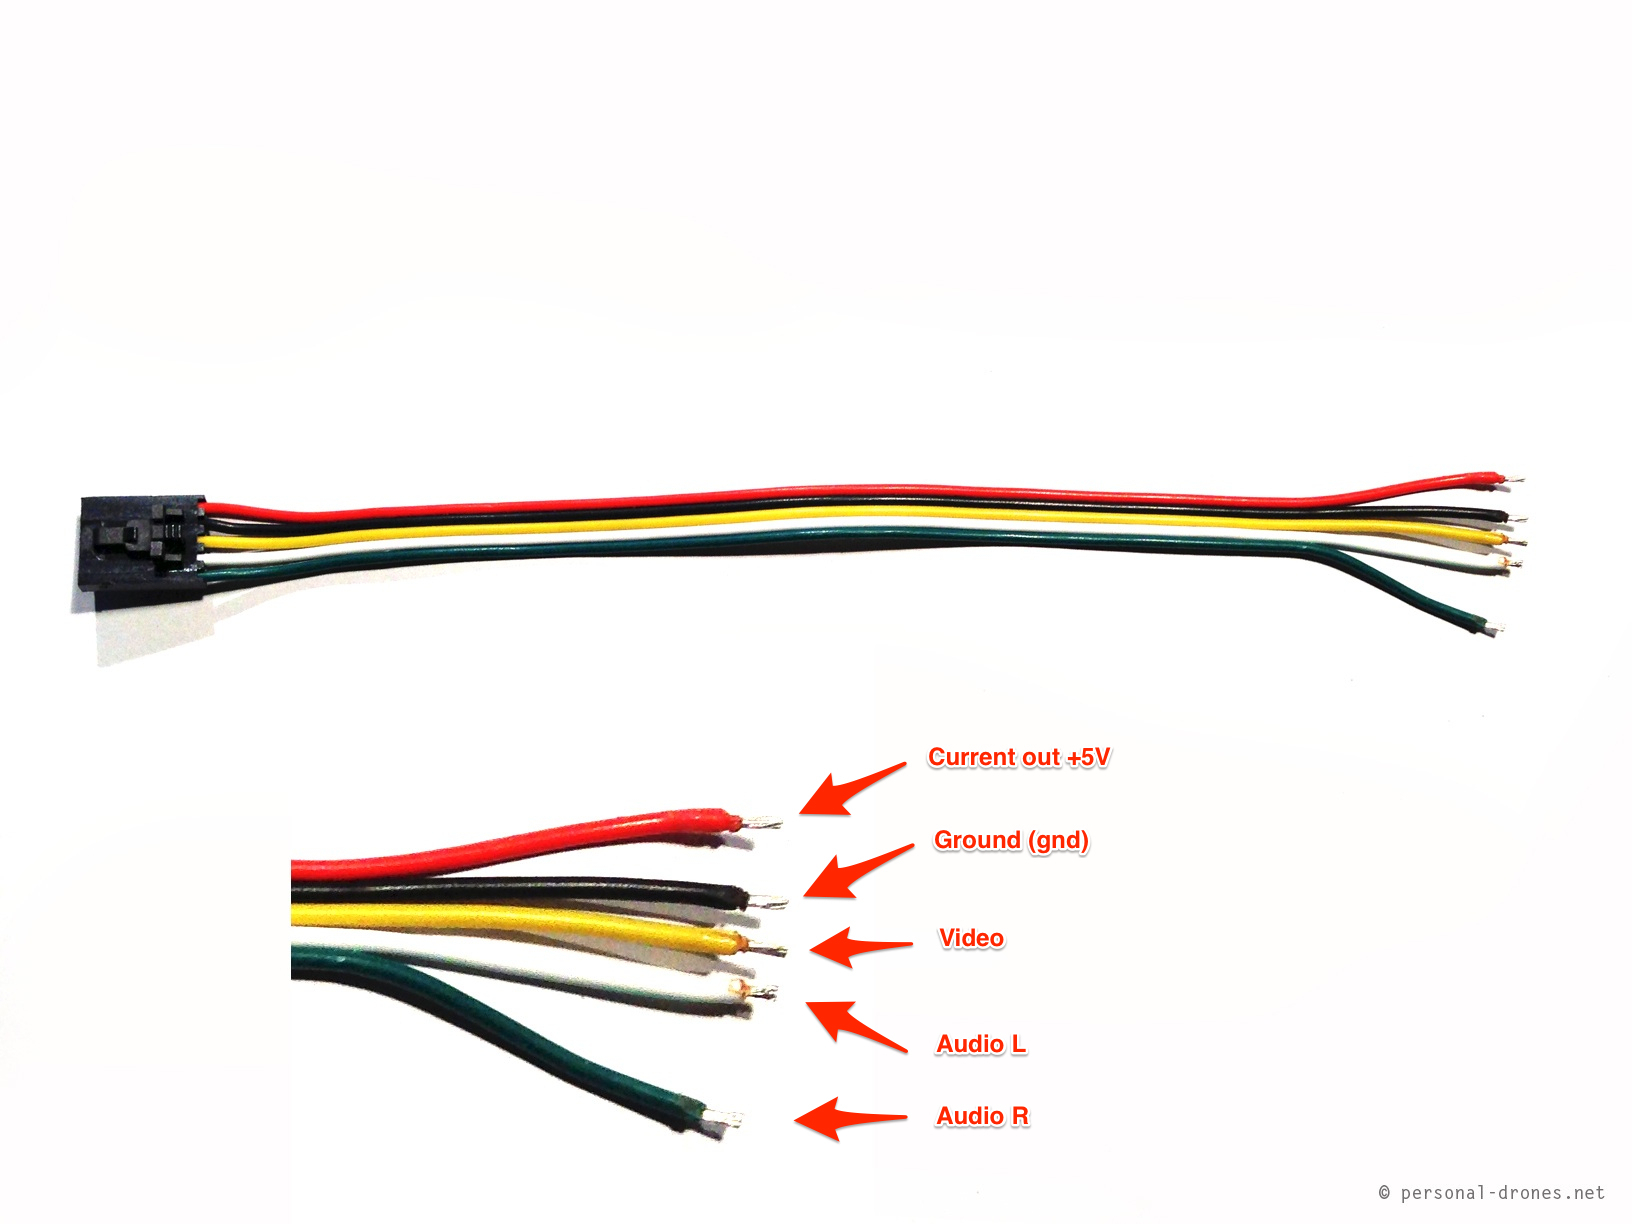 Camera Fpv Wire Diagram | Wiring Library - Fpv Camera Wiring Diagram